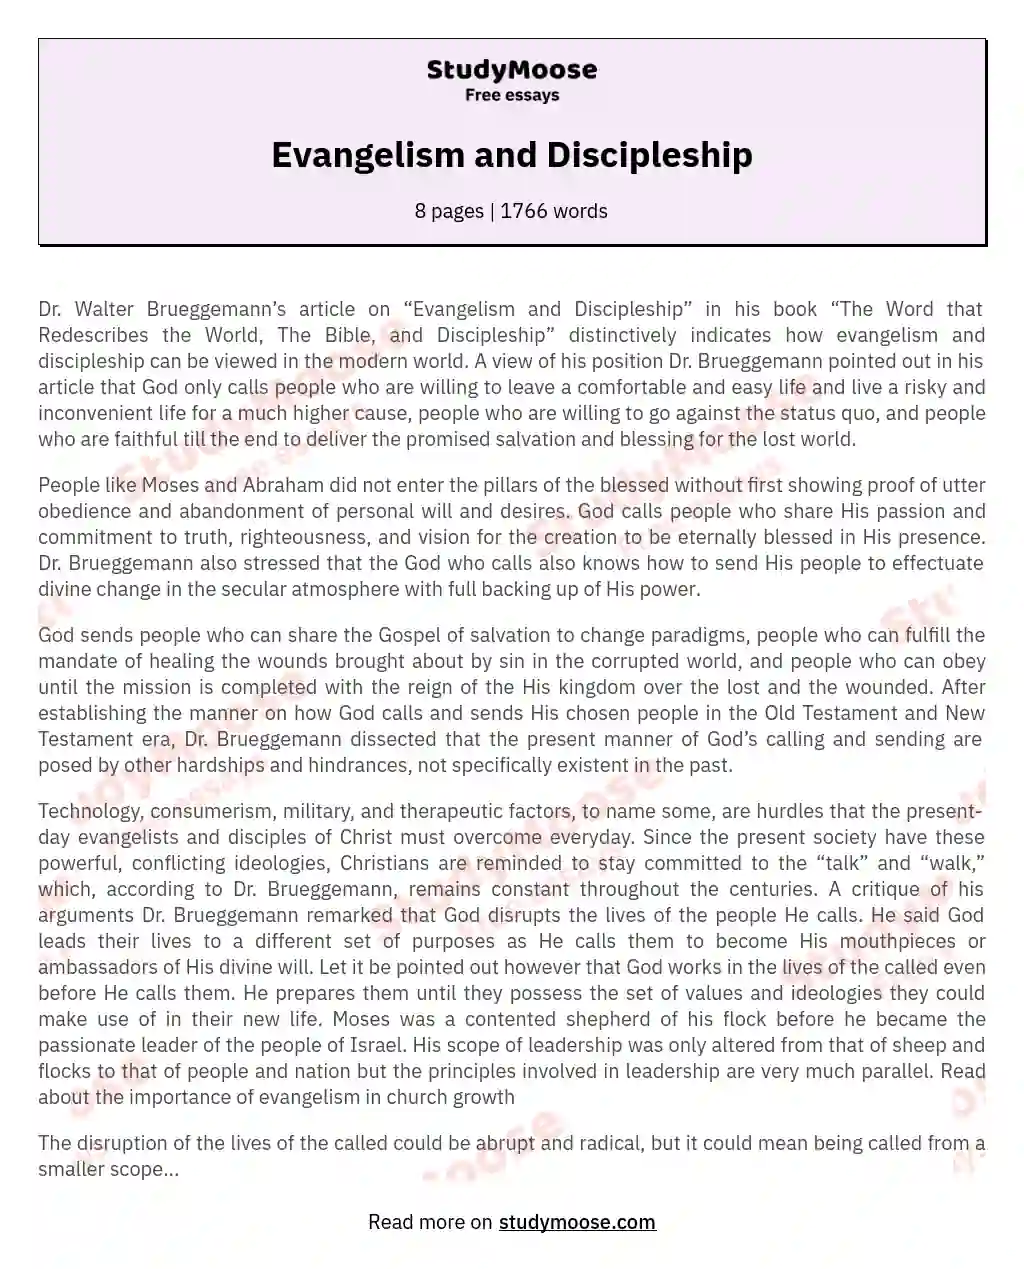 Evangelism and Discipleship essay